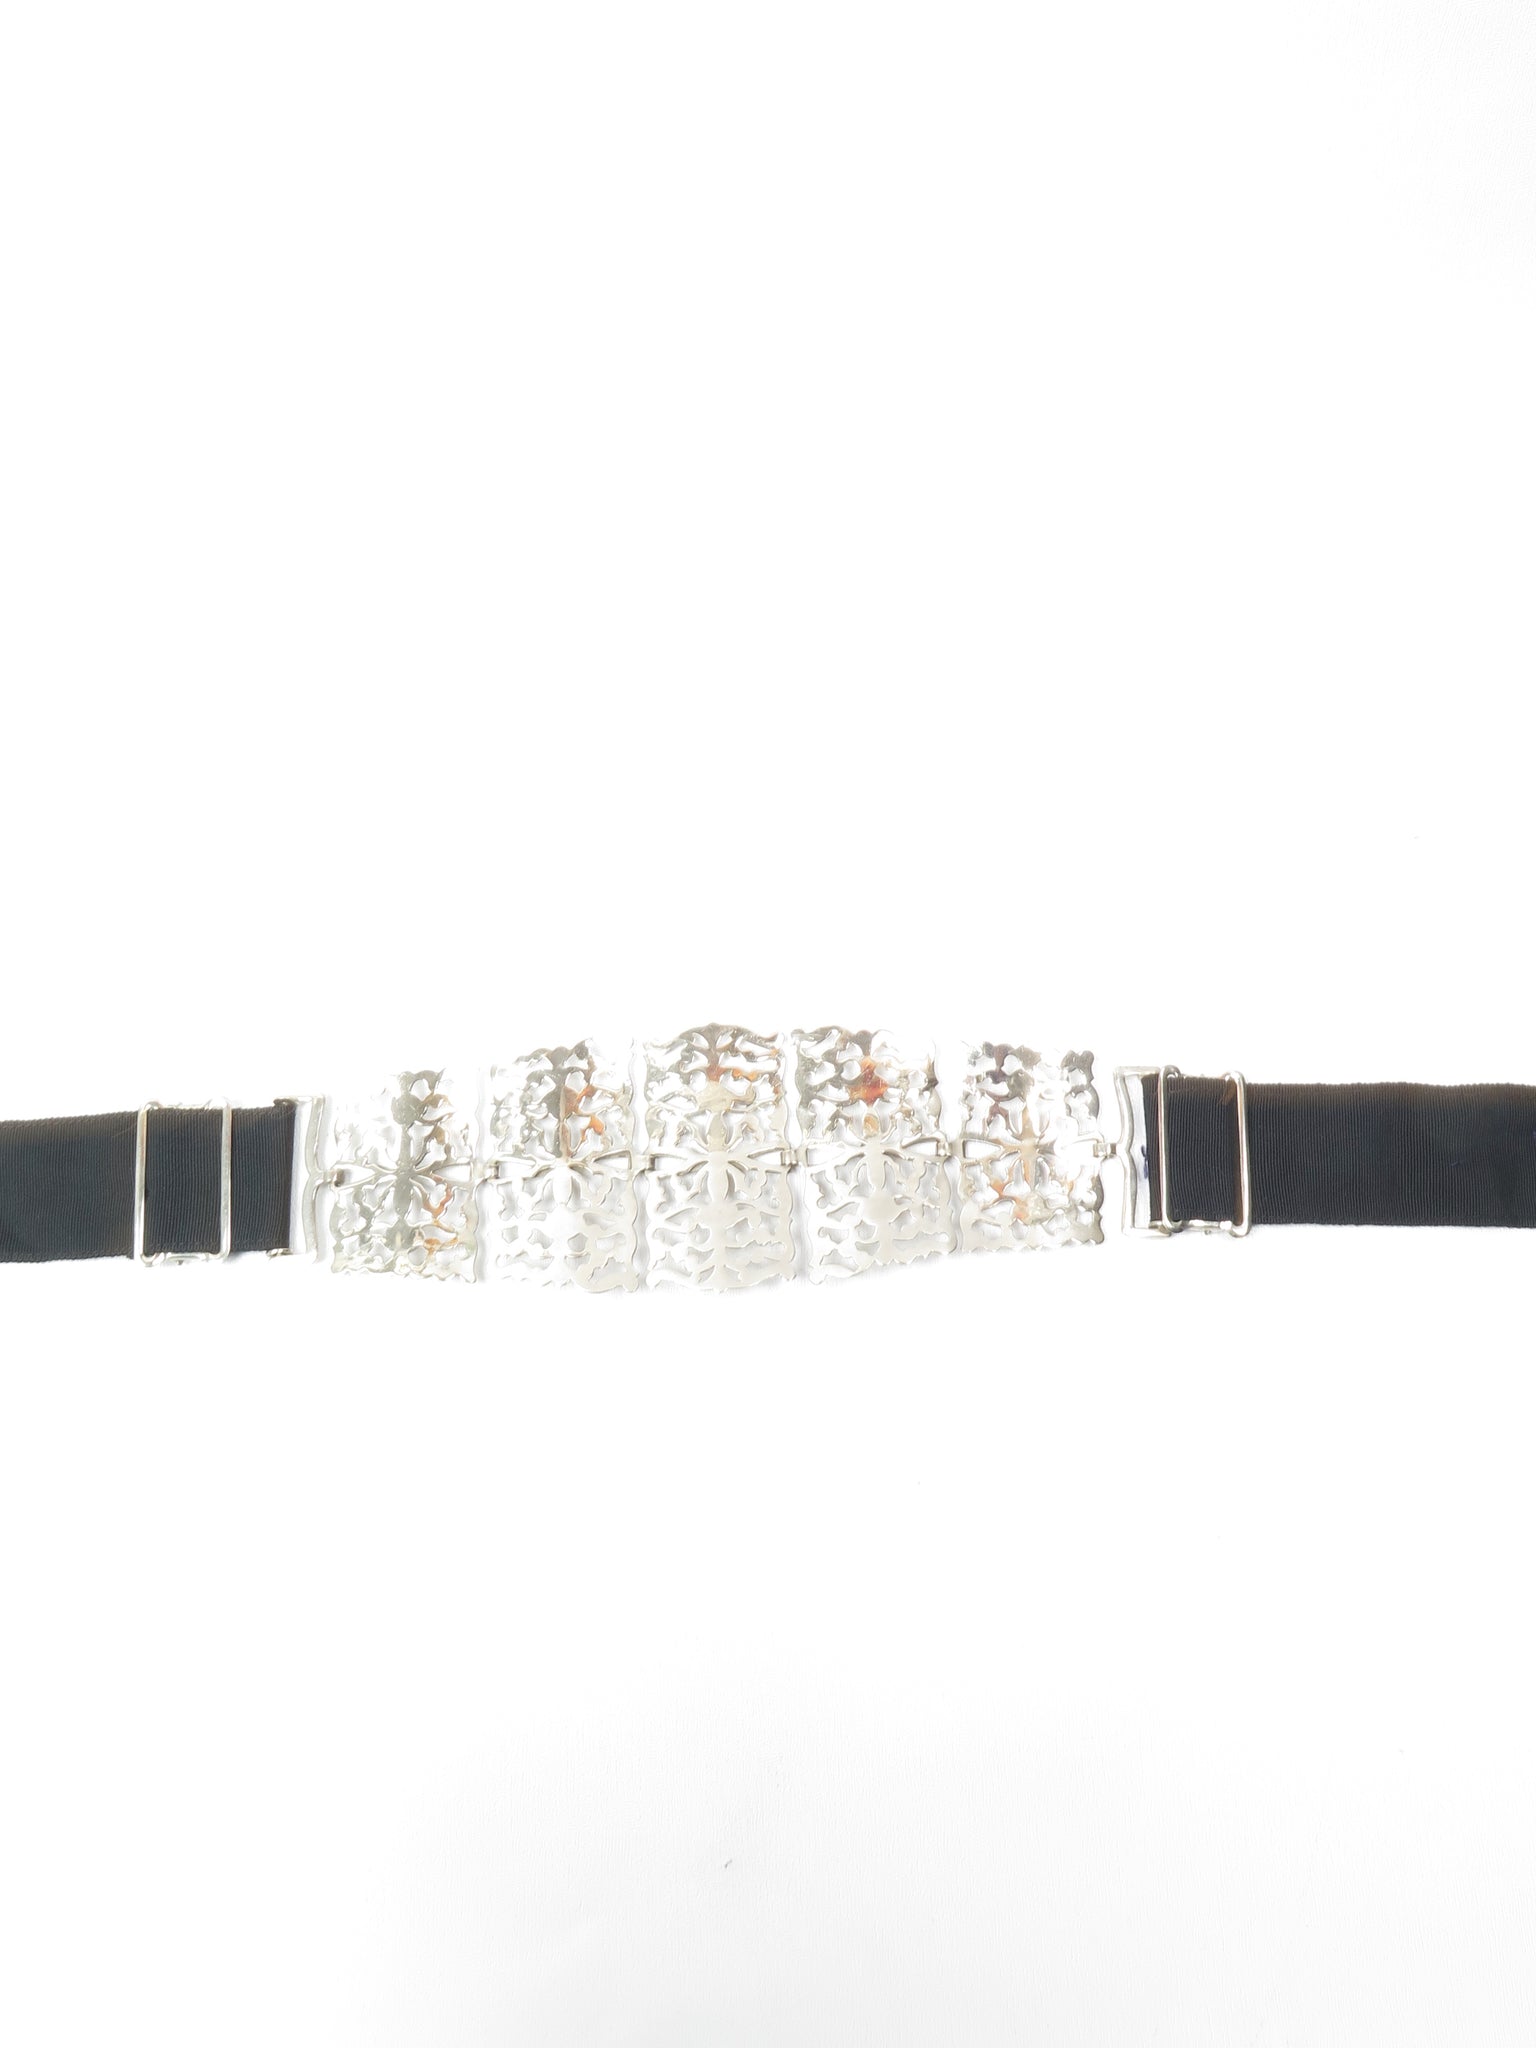 Silver Metal  Filigree Belt With Fabric {Adjustable}